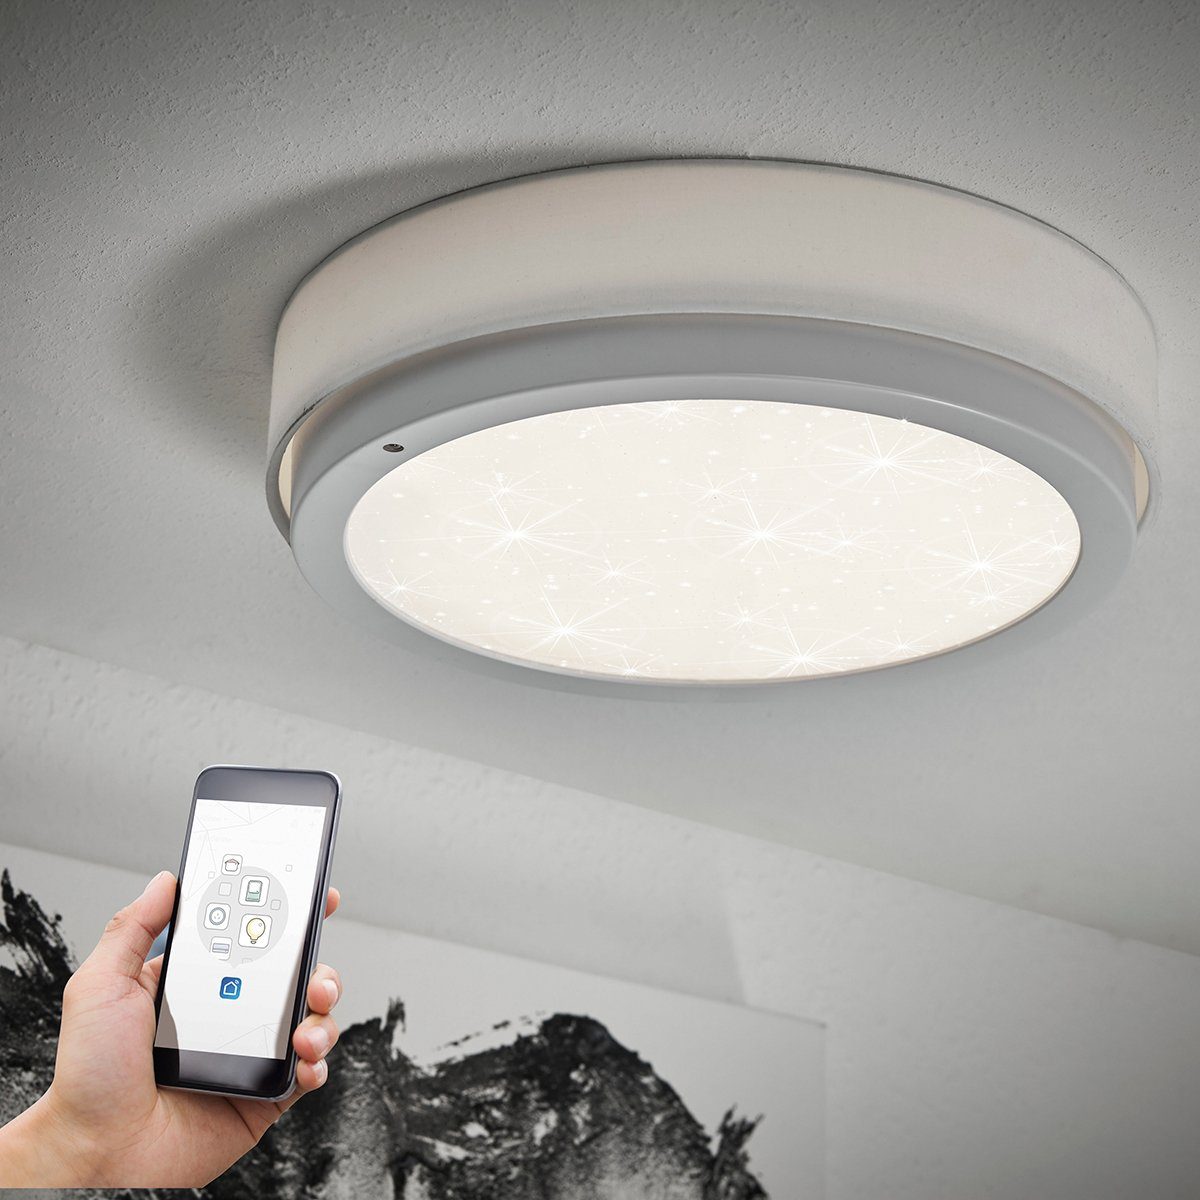 MeLiTec LED Deckenleuchte D112, LED fest integriert, warmweiß - kaltweiß, LED Leuchte Smart Home Wand Deckenleuchte Wandlampe creme-weiß 32x8 cm